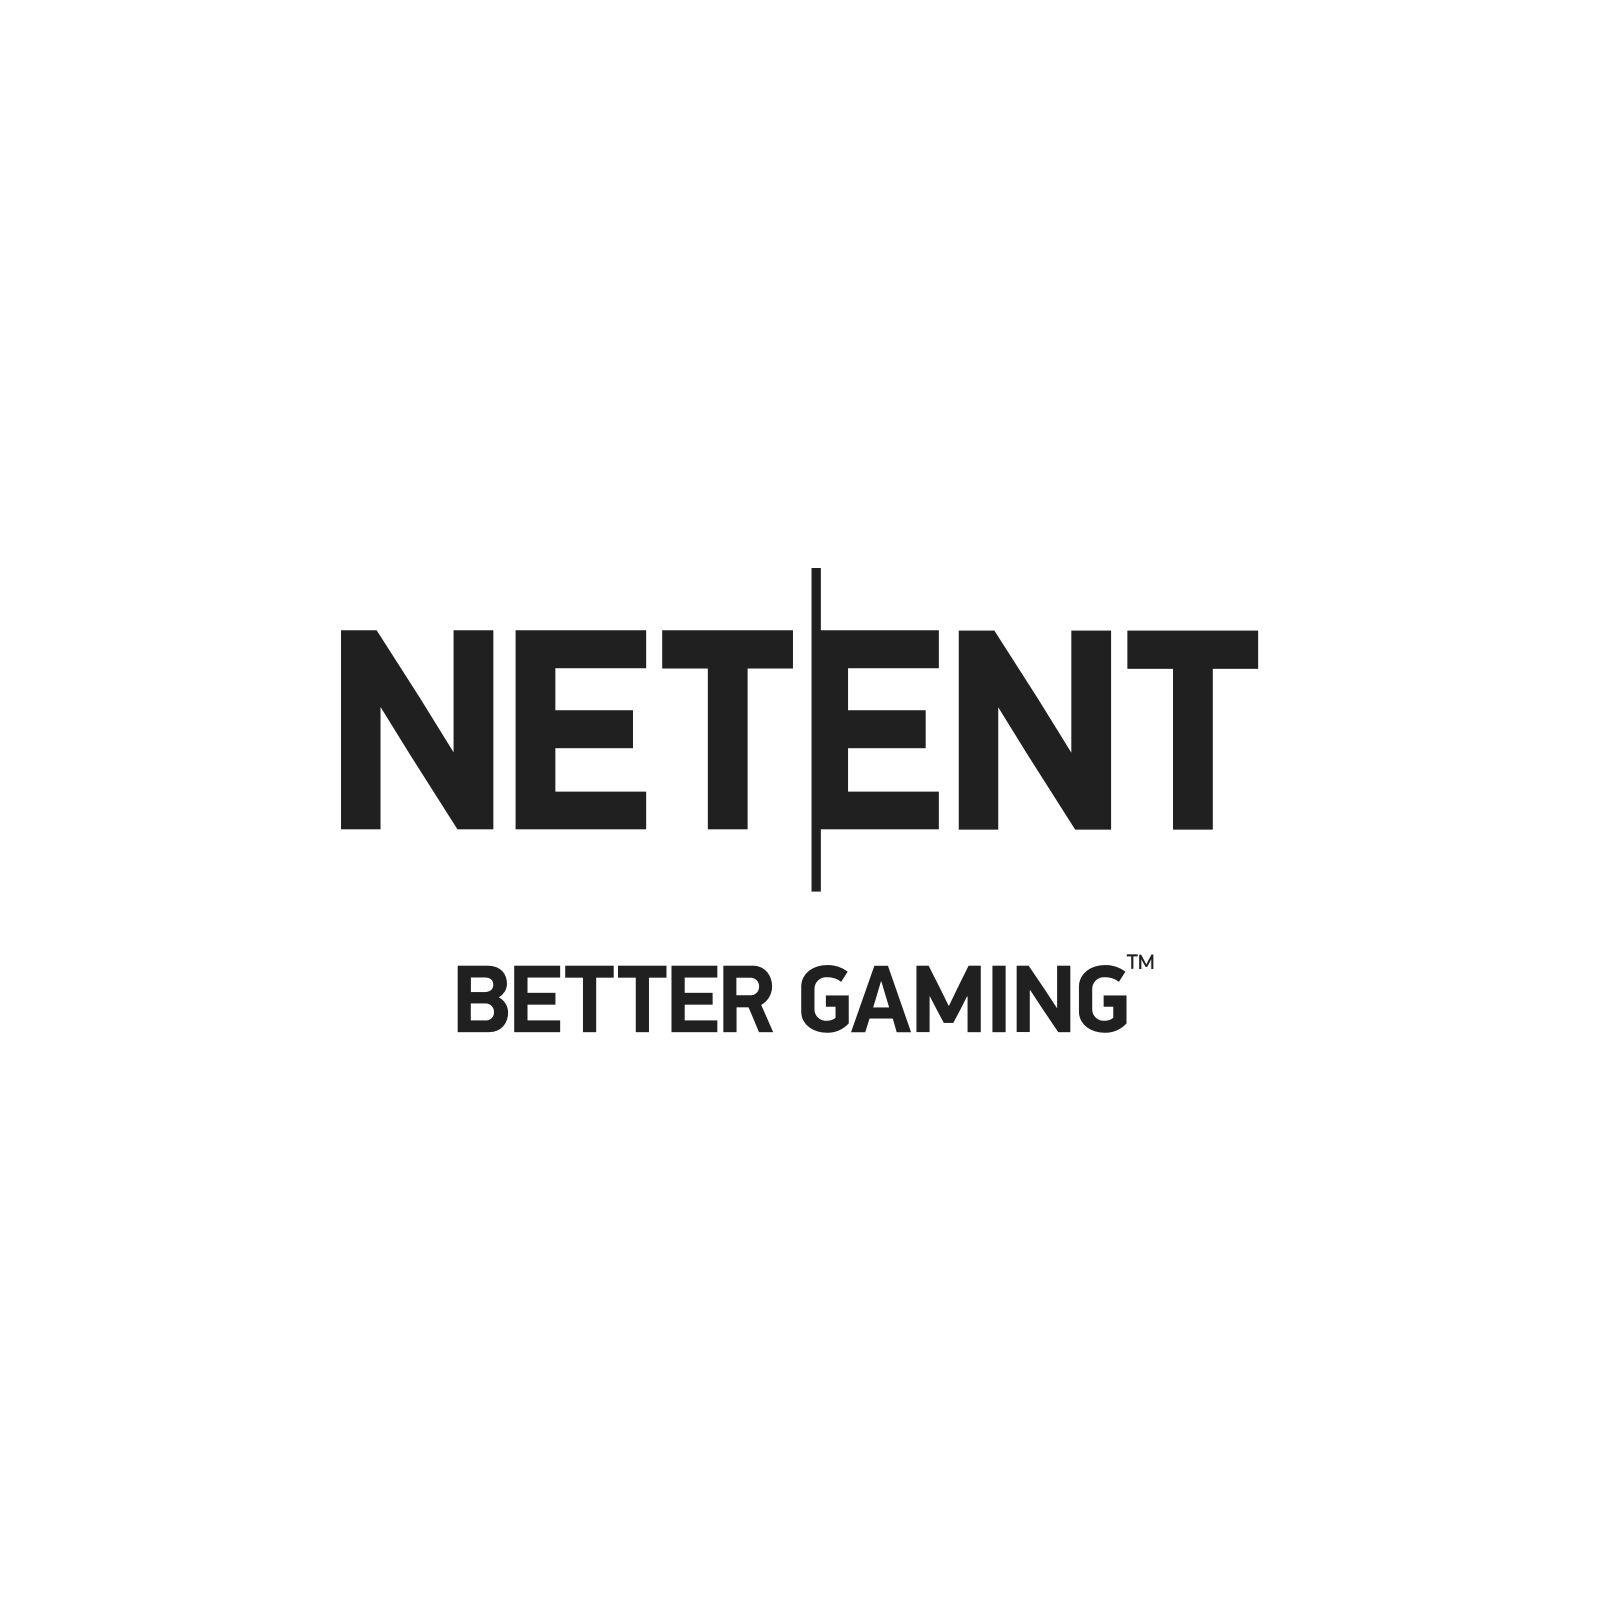 netent better gaming png logo